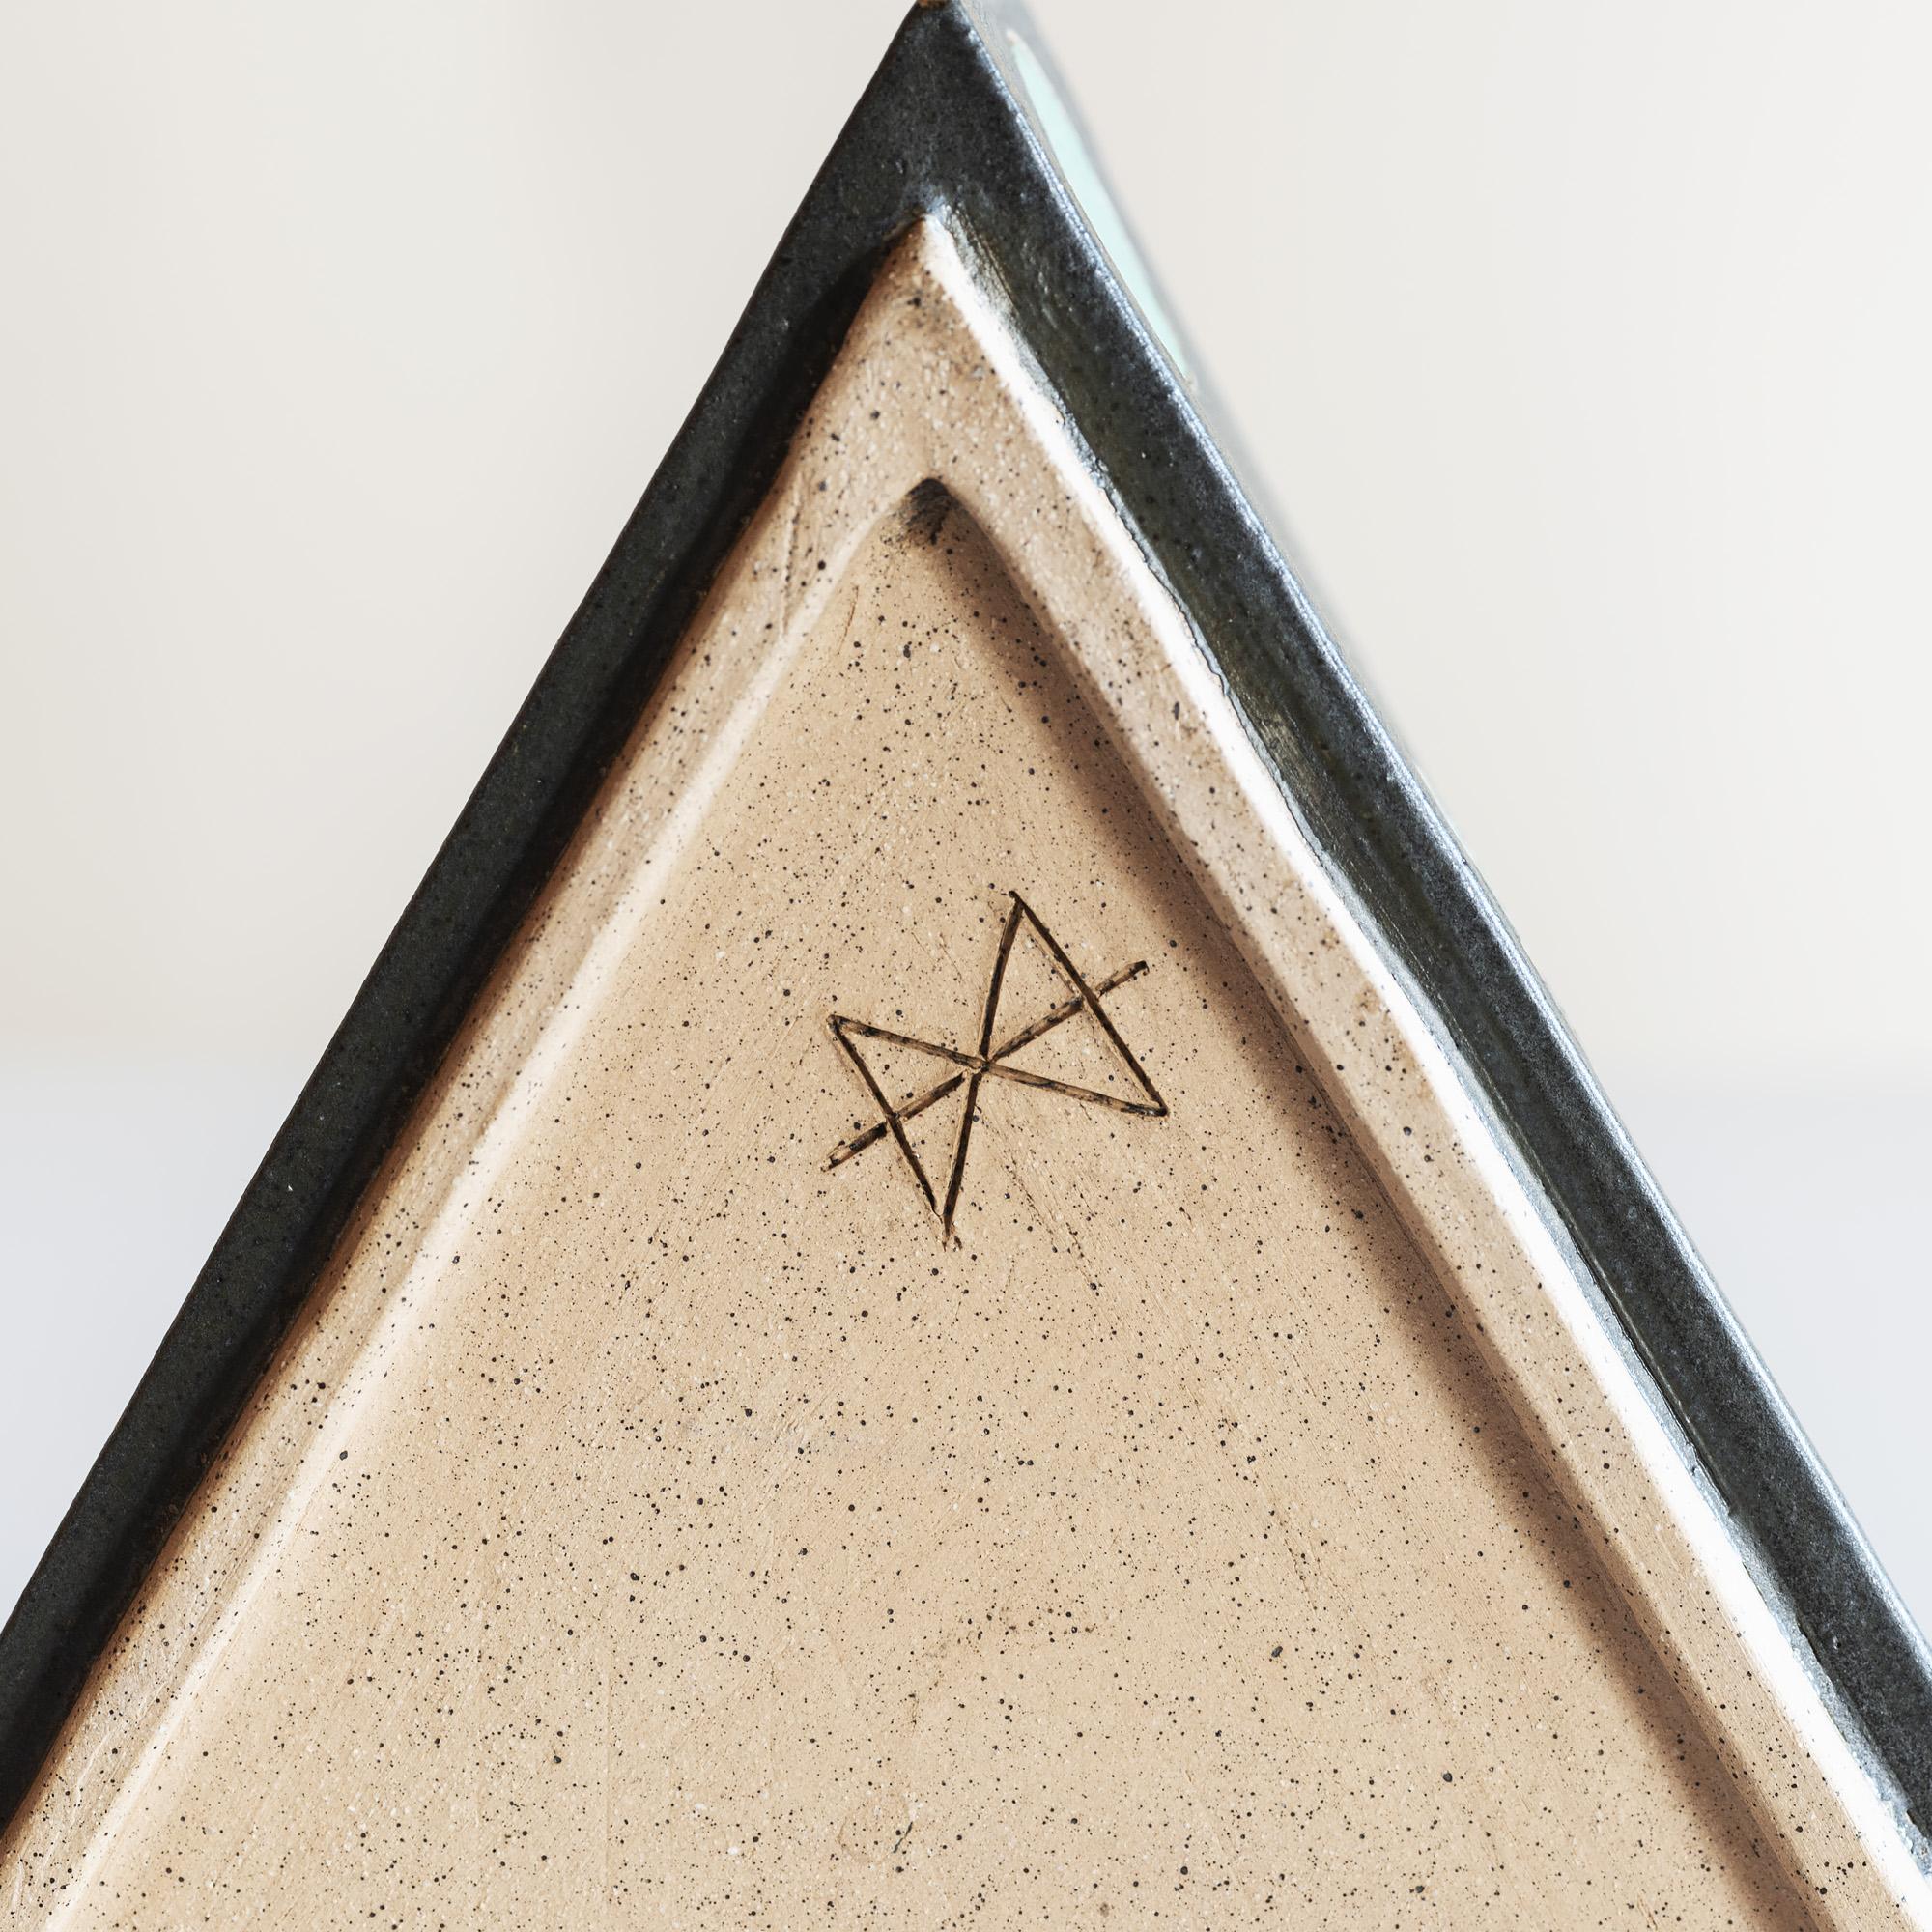 Ceramic Elemental Triangular Polka Dot Vessel by Matthew Ward, New Mexico, 2019